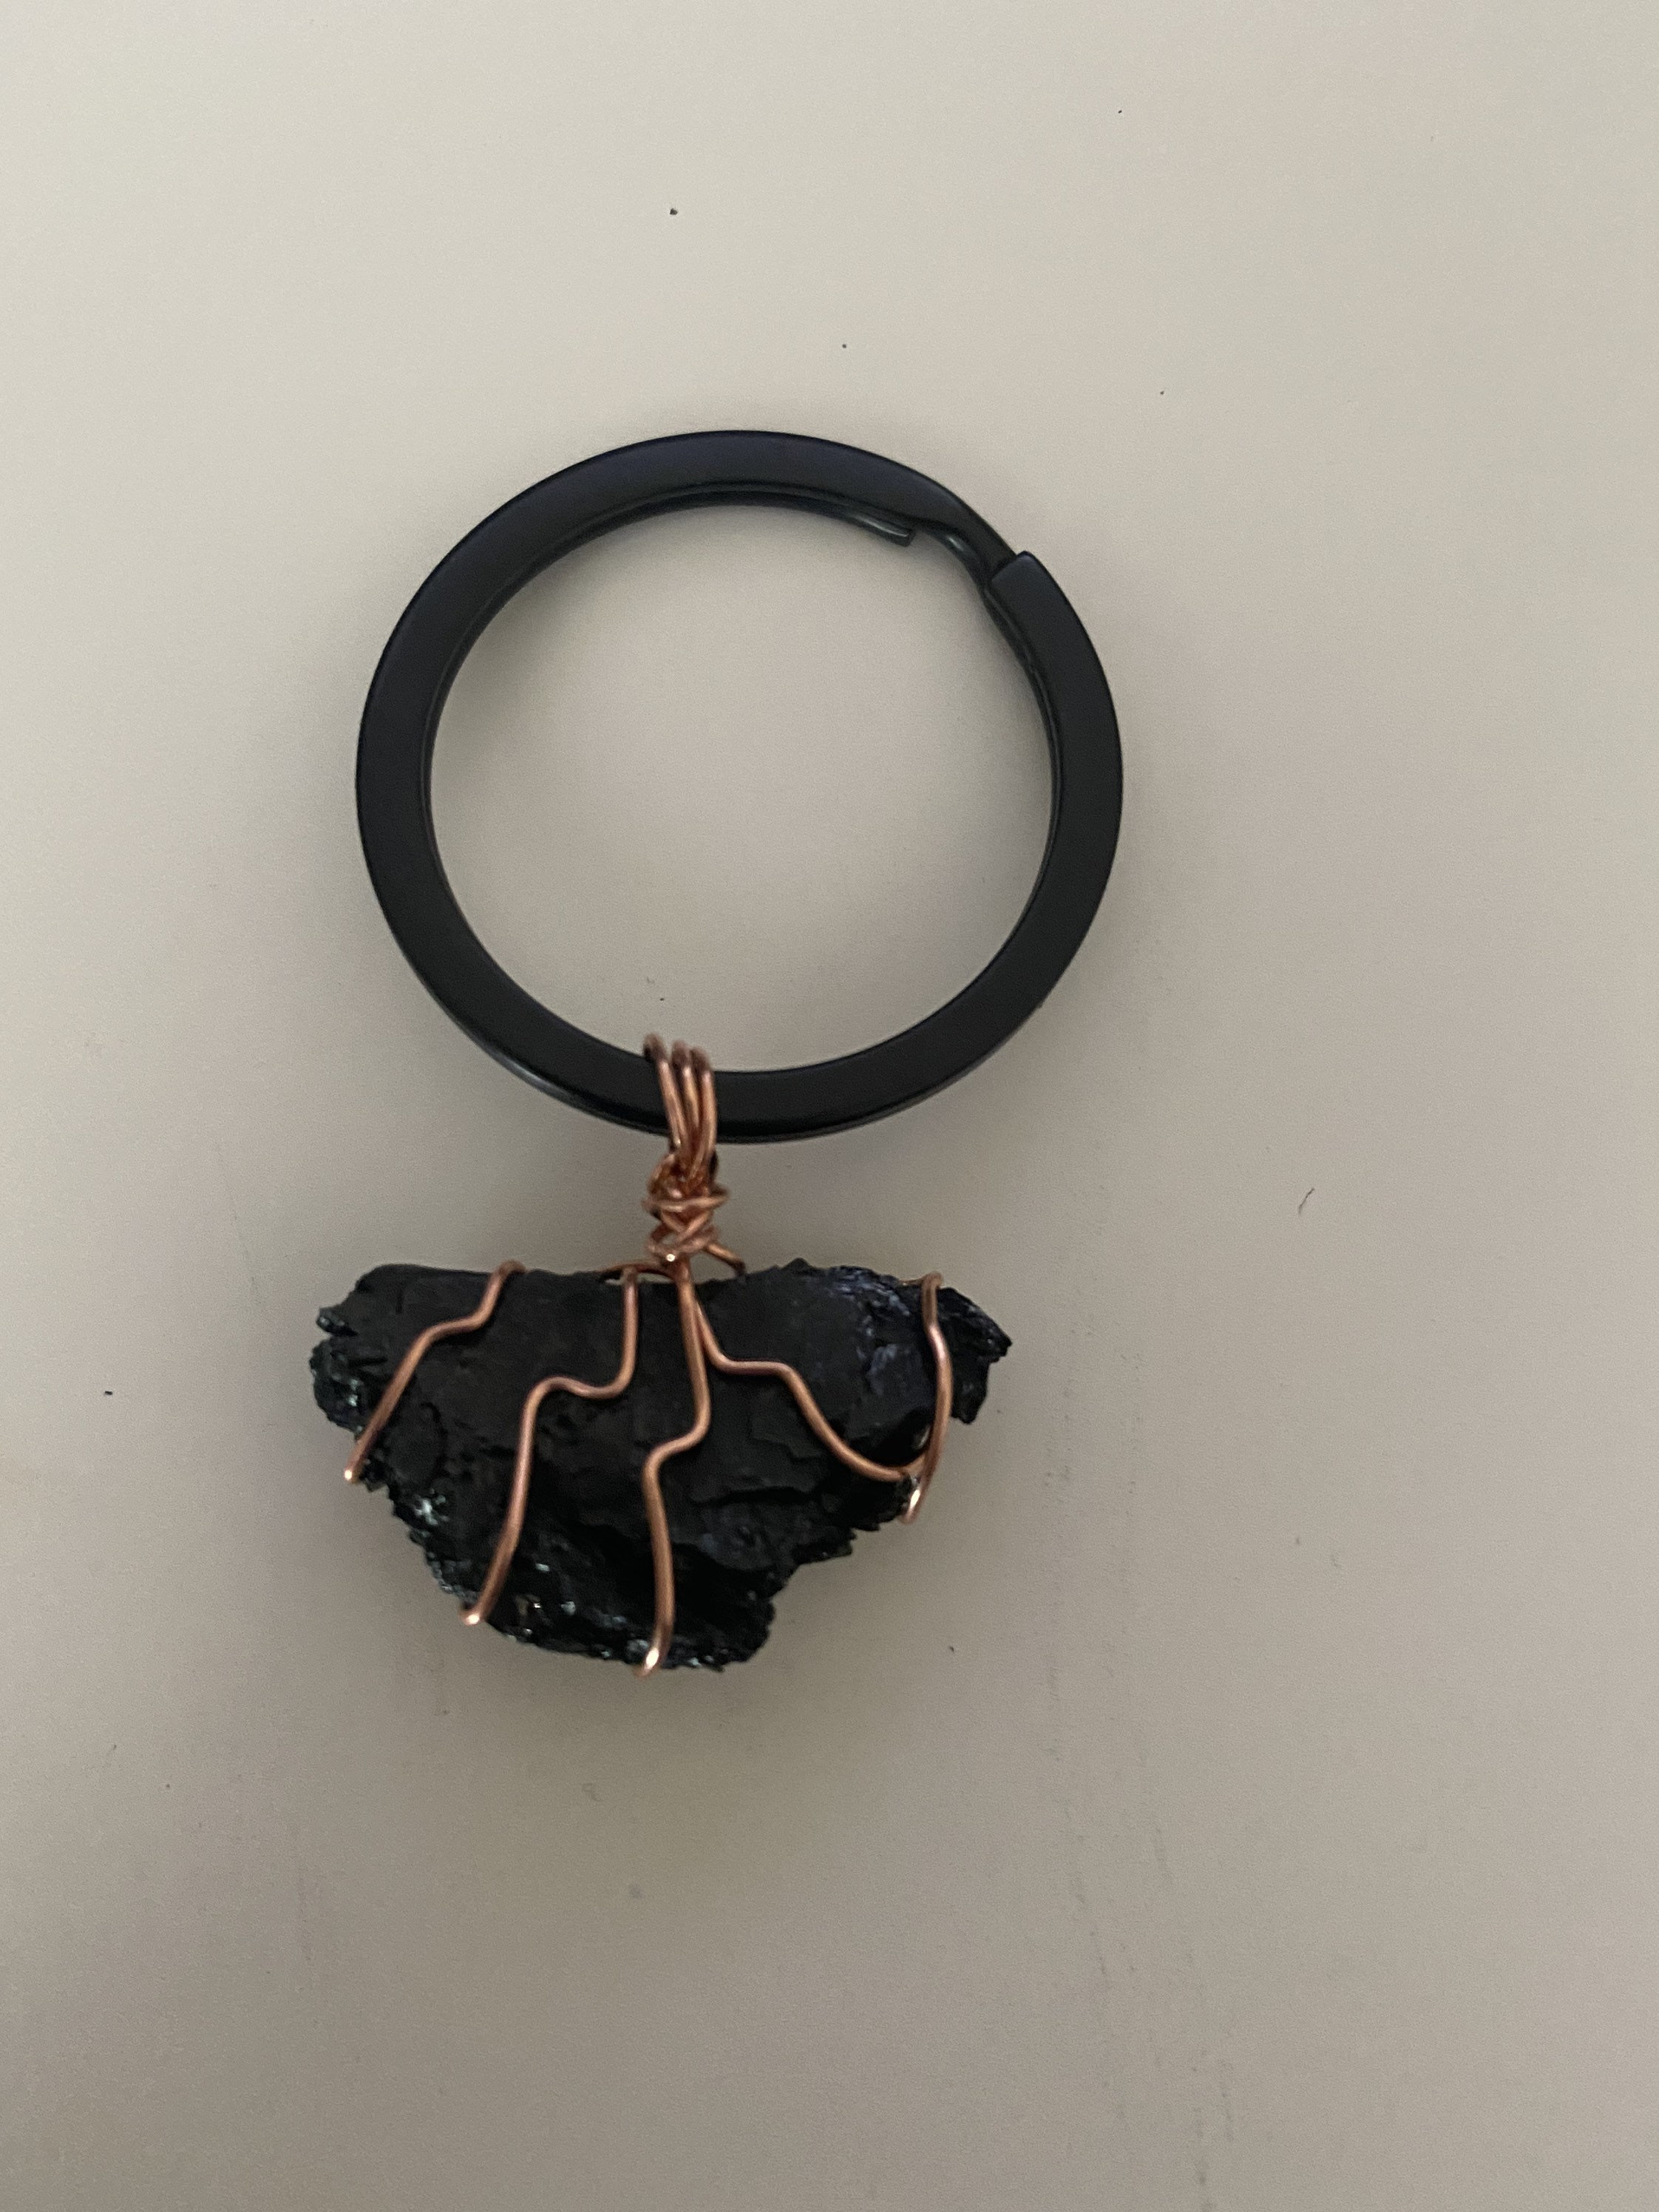 25mm Black Obsidian Howlite Yinyang Crystal Pendant Key Chain Bulk Wholesale Key Chain